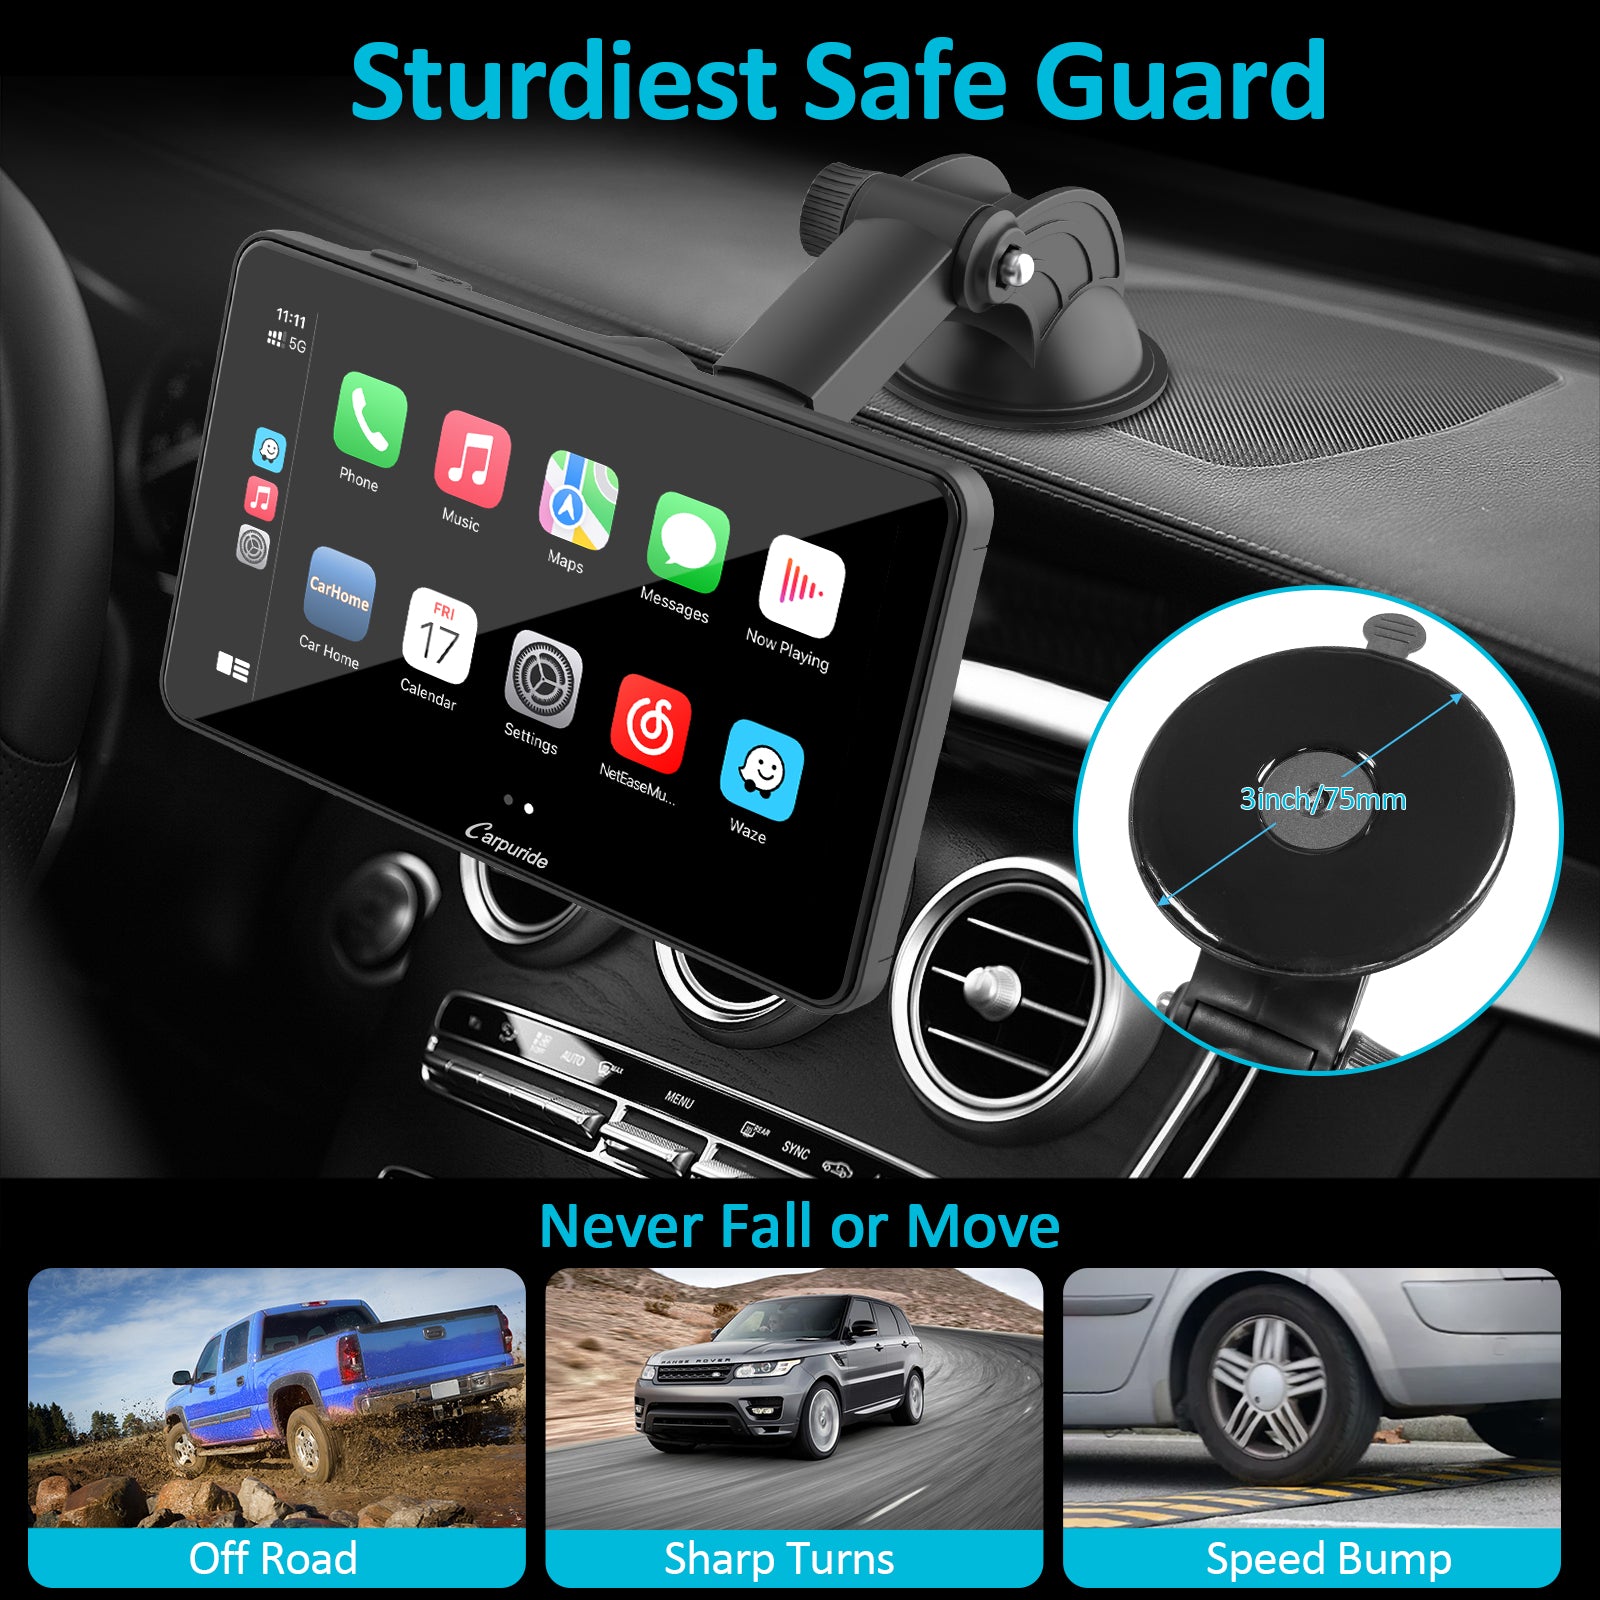 Pantalla MULTIMEDIA UNIVERSAL Carpuride / 10,2'' FullHD / Android Auto y  Apple CarPlay INALÁMBRICOS 